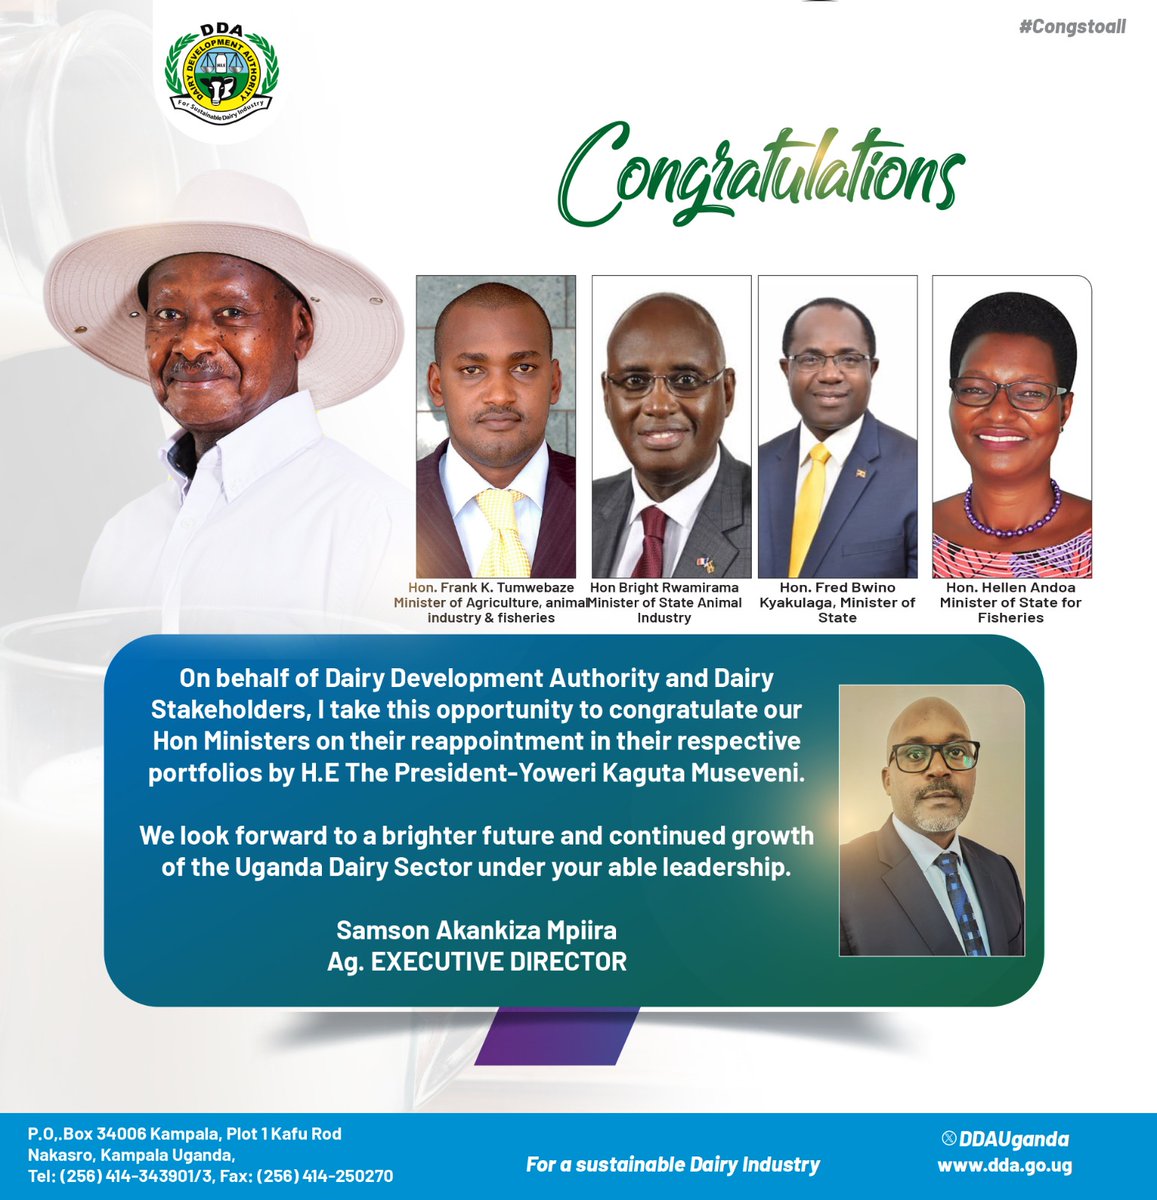 Congratulations our Hon. Ministers @FrankTumwebazek @DrRwamiramaBK @FredBwino on your reappointment by H.E @KagutaMuseveni in your respective capacities from @SandraMwebaze1 @MpiiraSamson @DDAUganda 👏